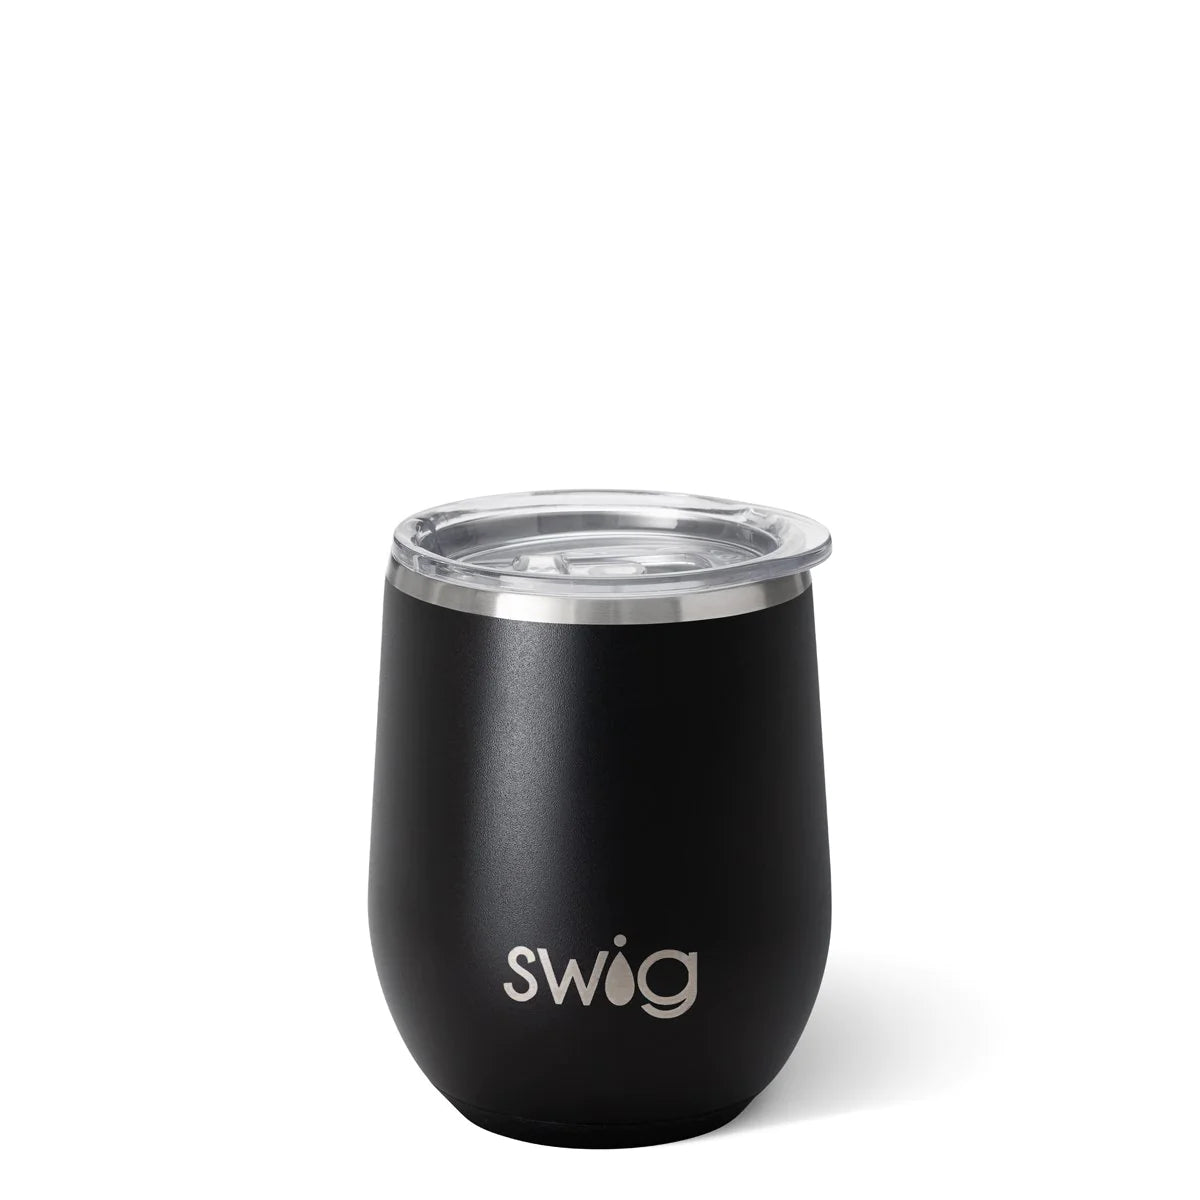 Swig Life Tumbler - Boho Desert Insulated Stainless Steel - 32oz - Dishwasher Safe with A Non-Slip Base